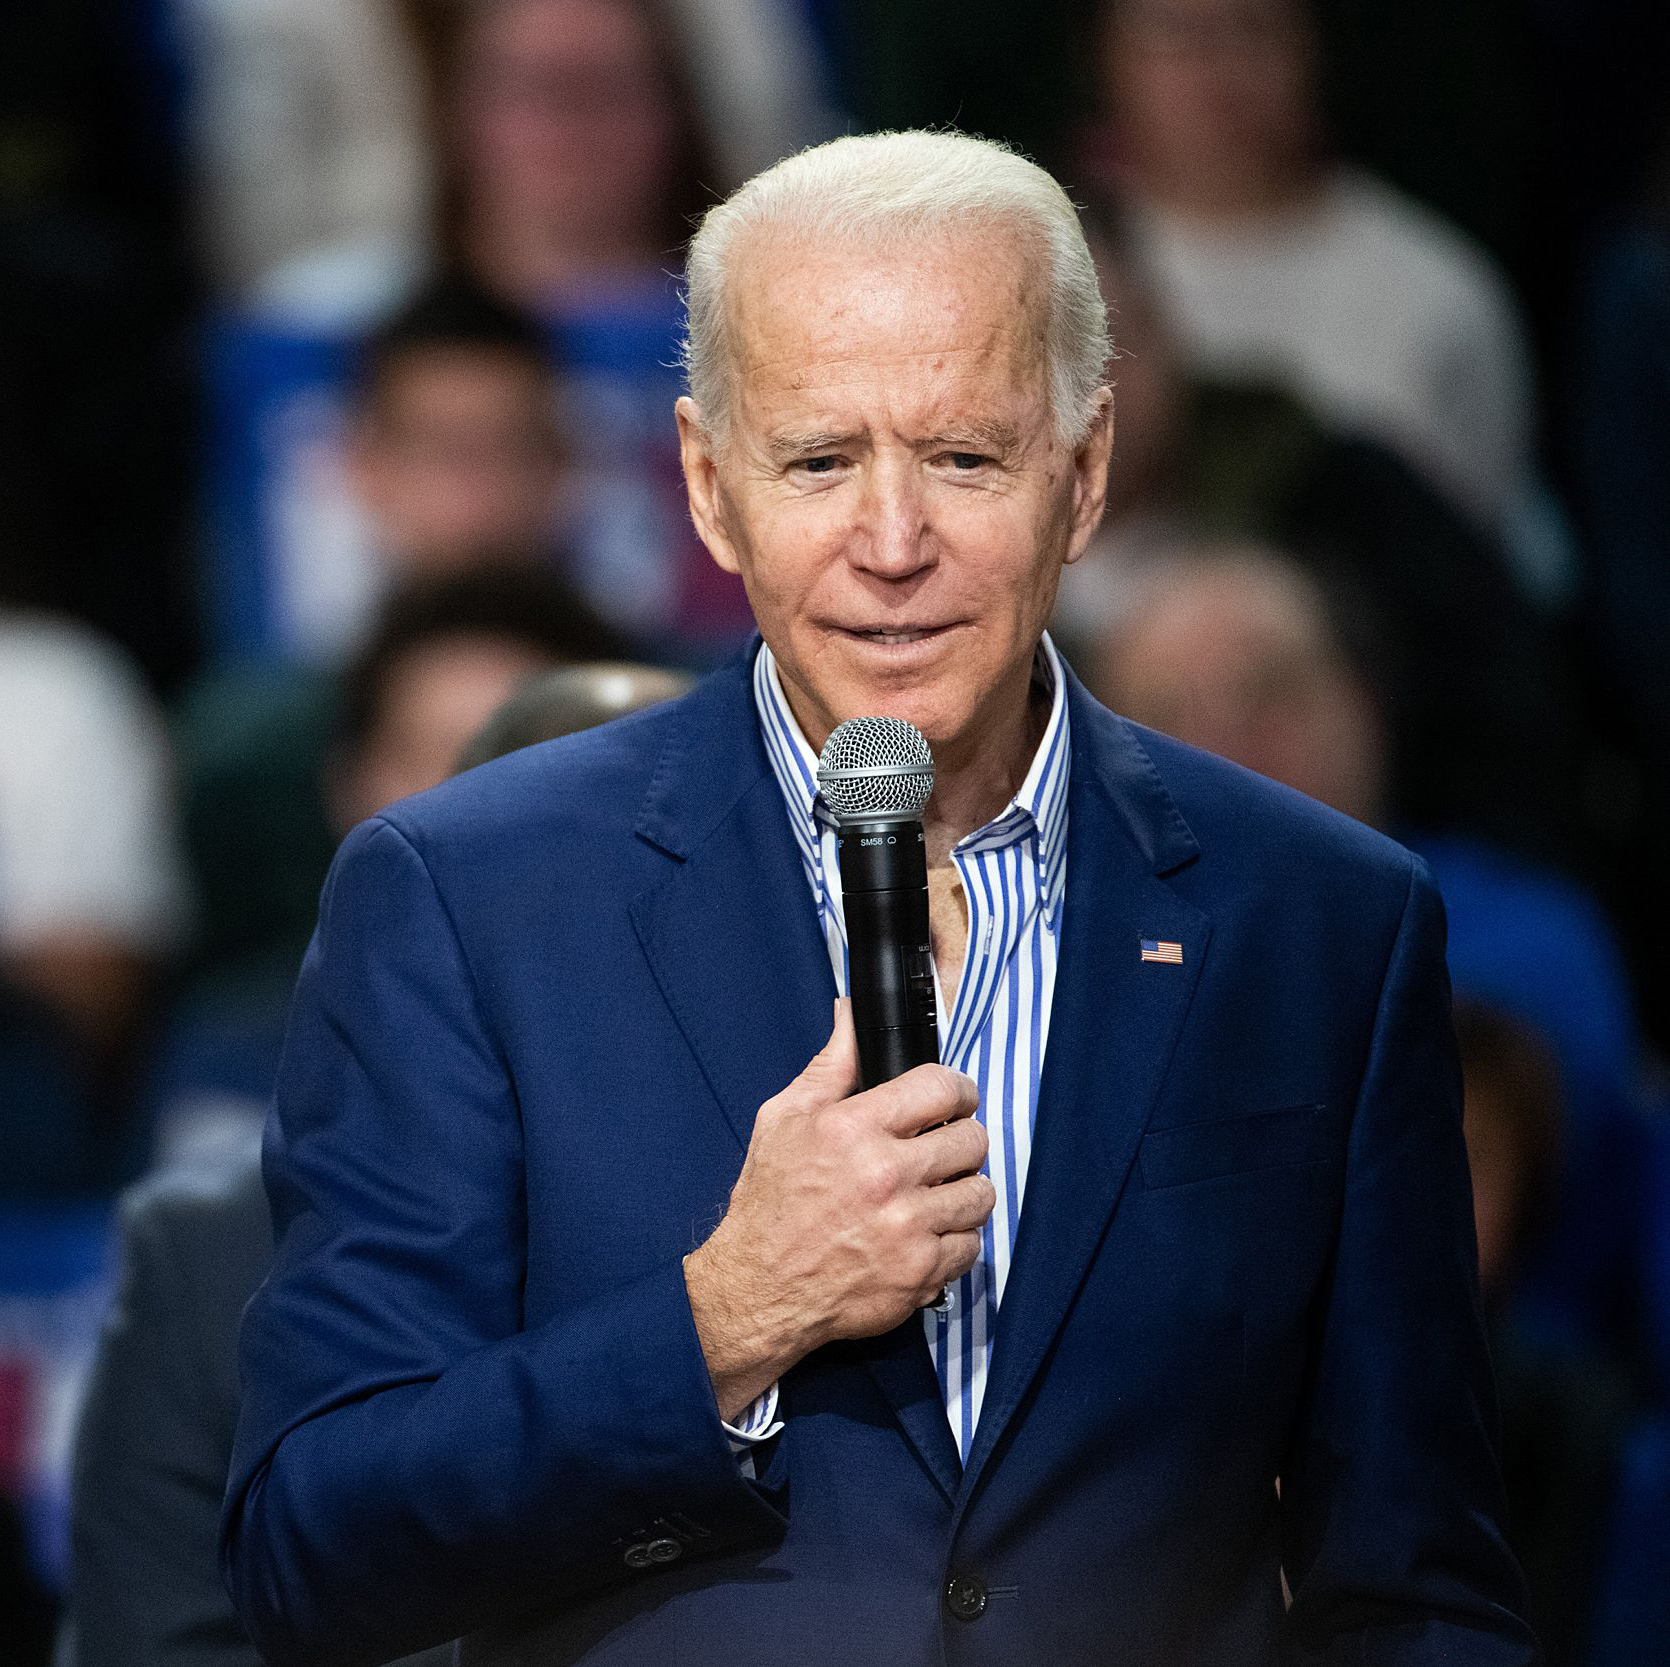 DNC 2020: Convention wraps with Joe Biden's big moment | WATCH LIVE ...